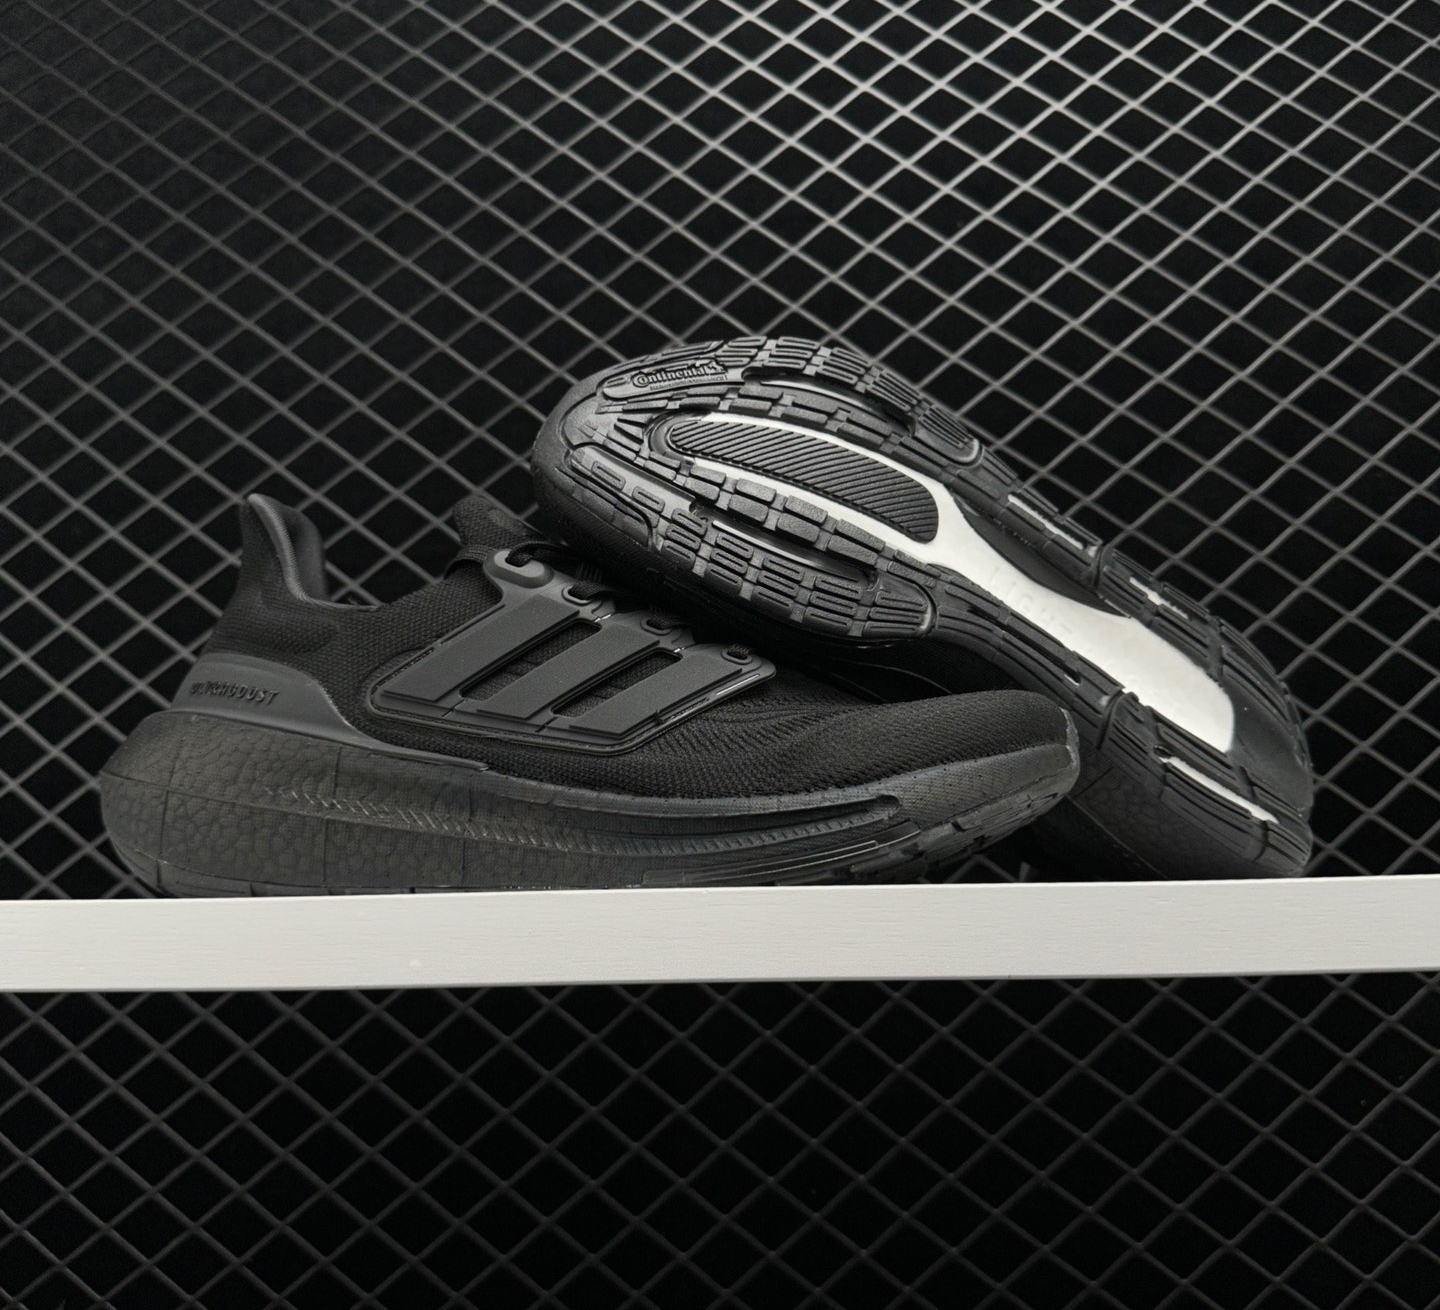 Adidas UltraBoost Light Triple Black GZ5159 - Sleek and Stylish Running Shoes